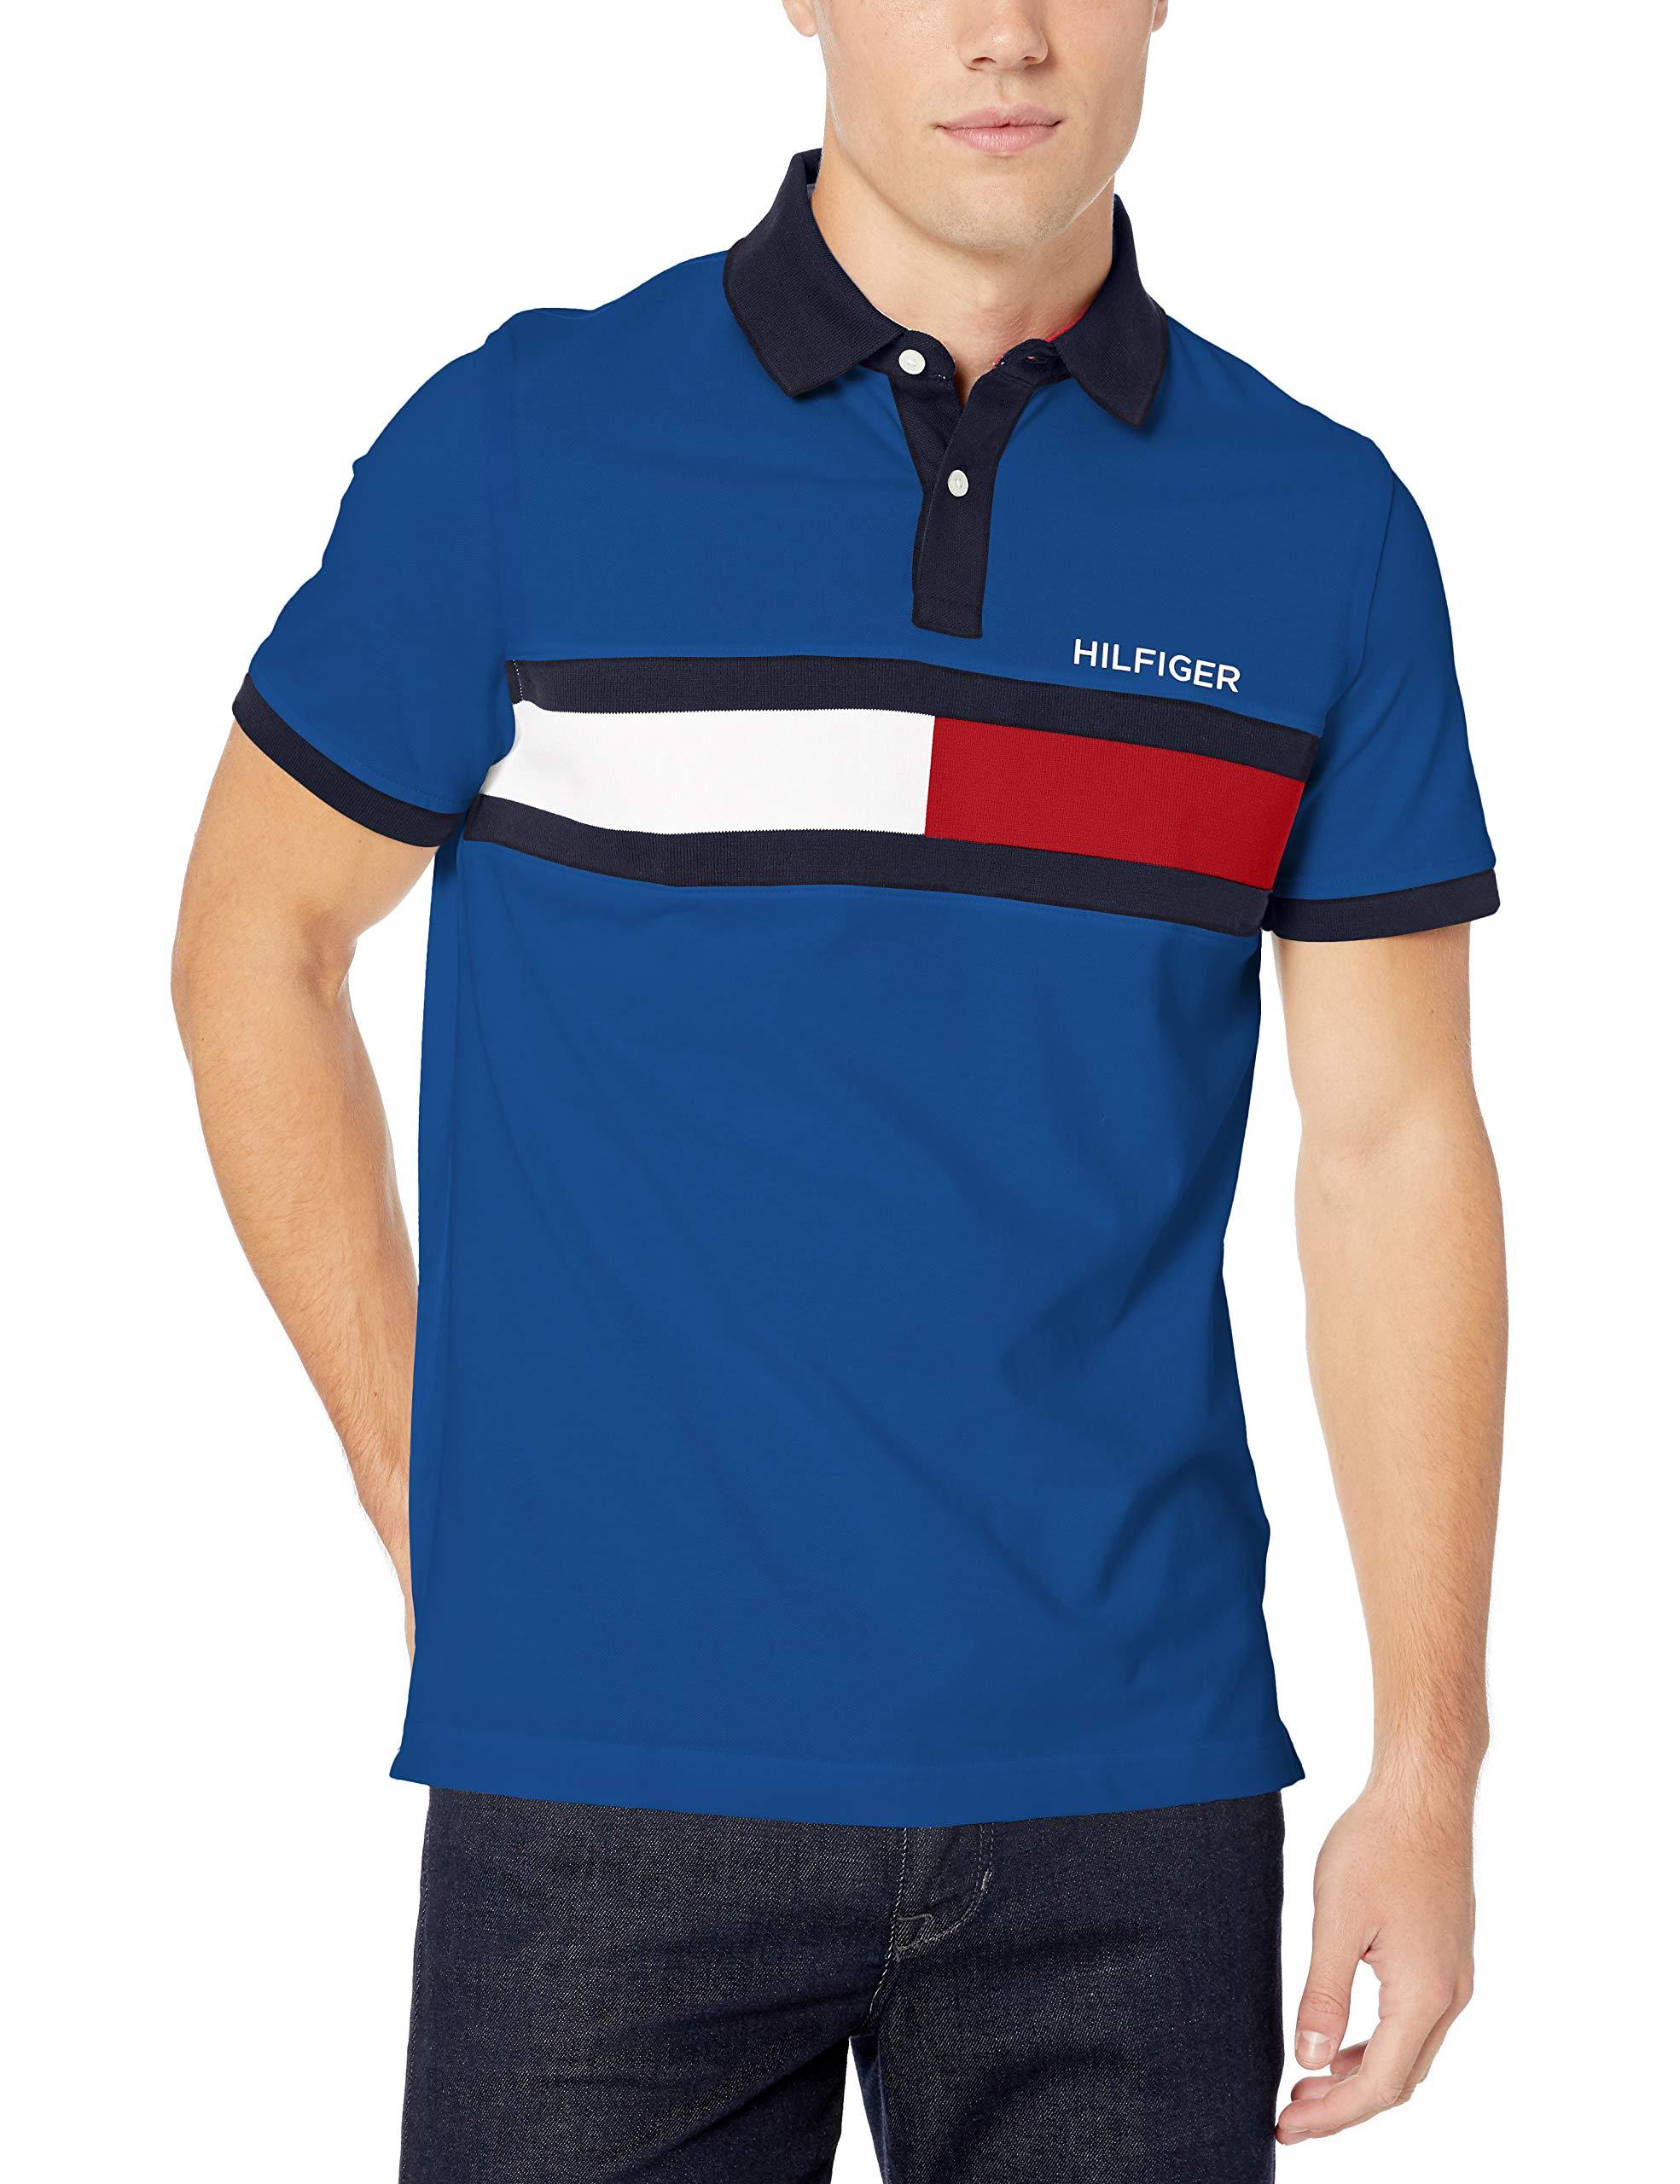 NWT $69.50 Tommy Hilfiger Men's Custom Fit USA Flag Polo Shirt 